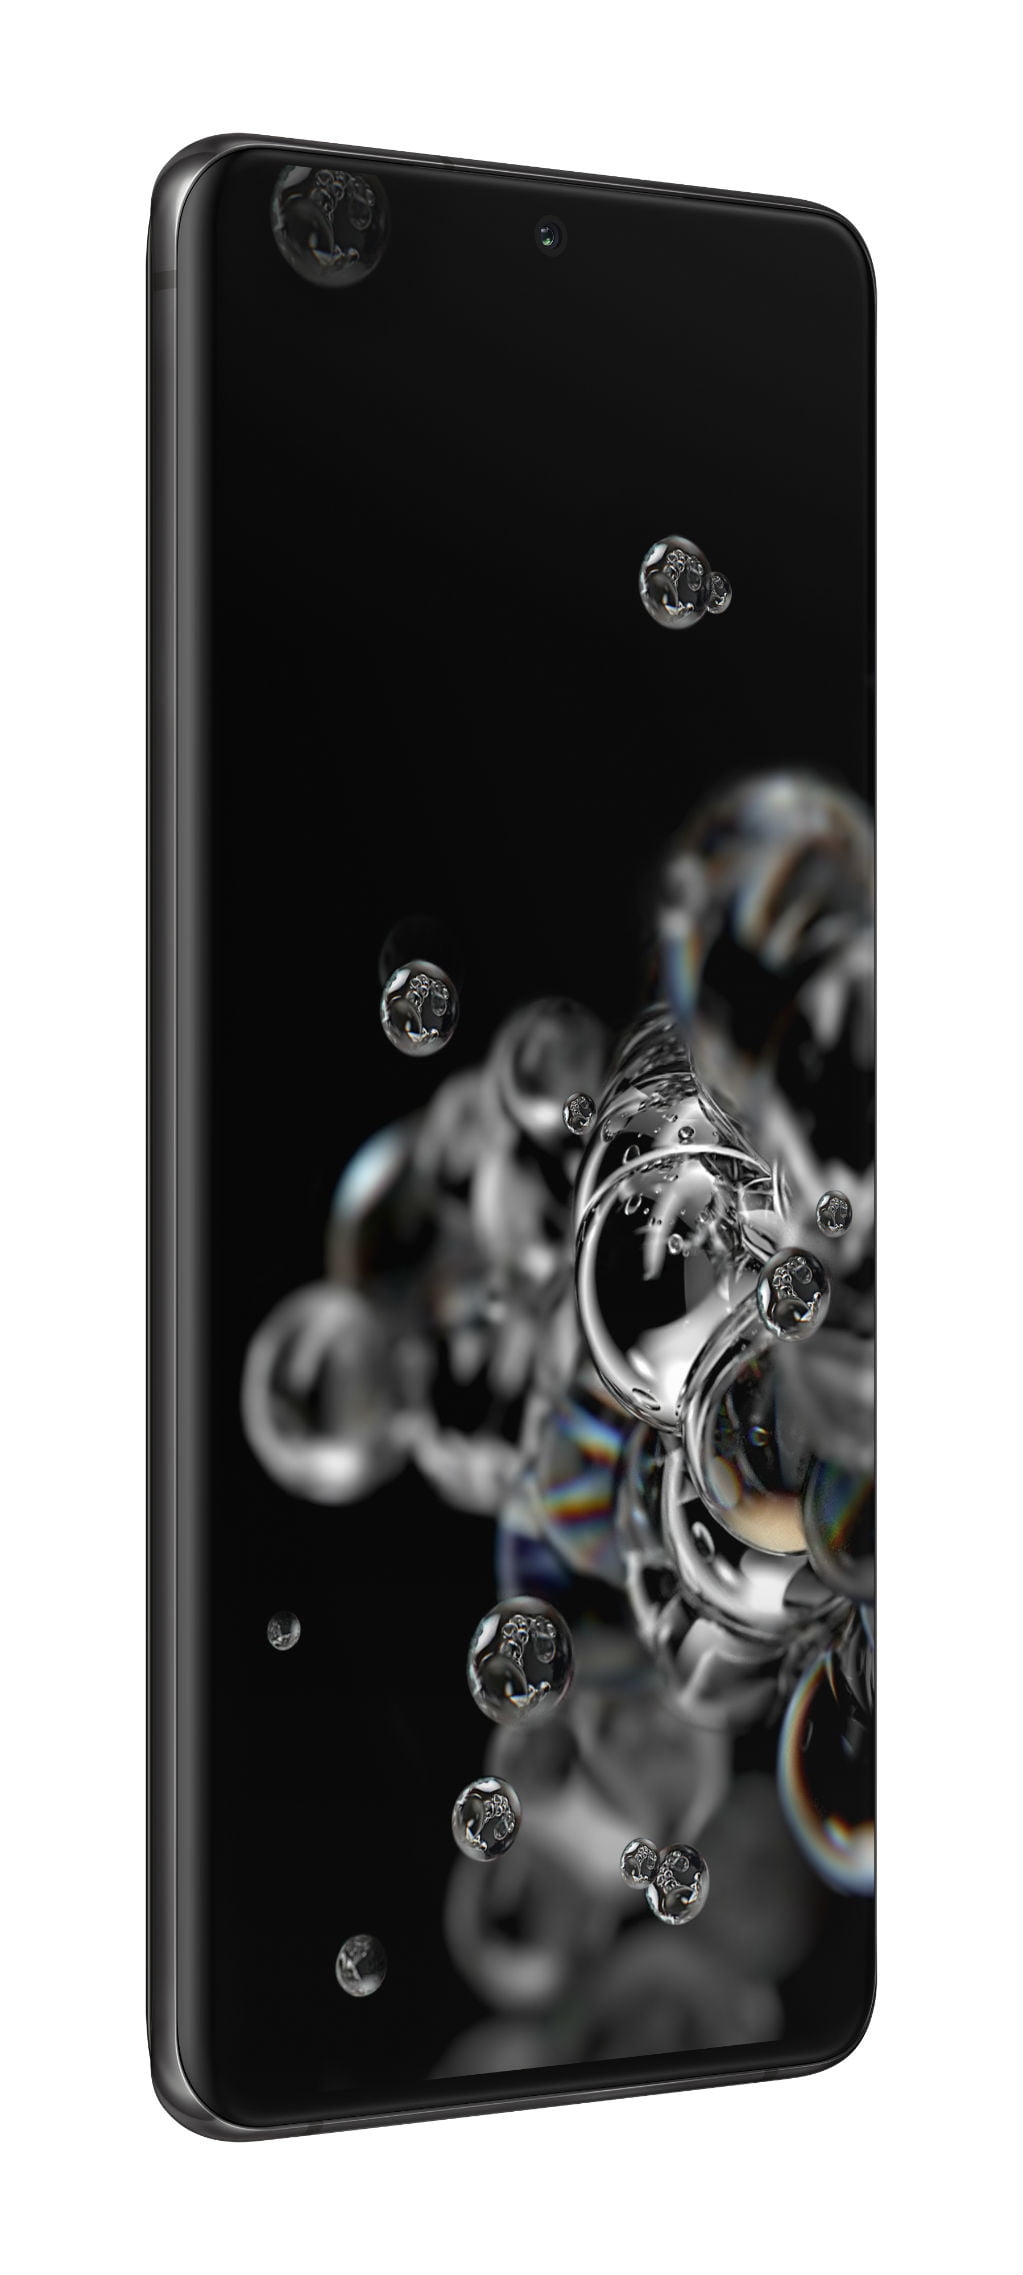 SAMSUNG Unlocked Galaxy S20 Ultra, 128GB Black - Smartphone